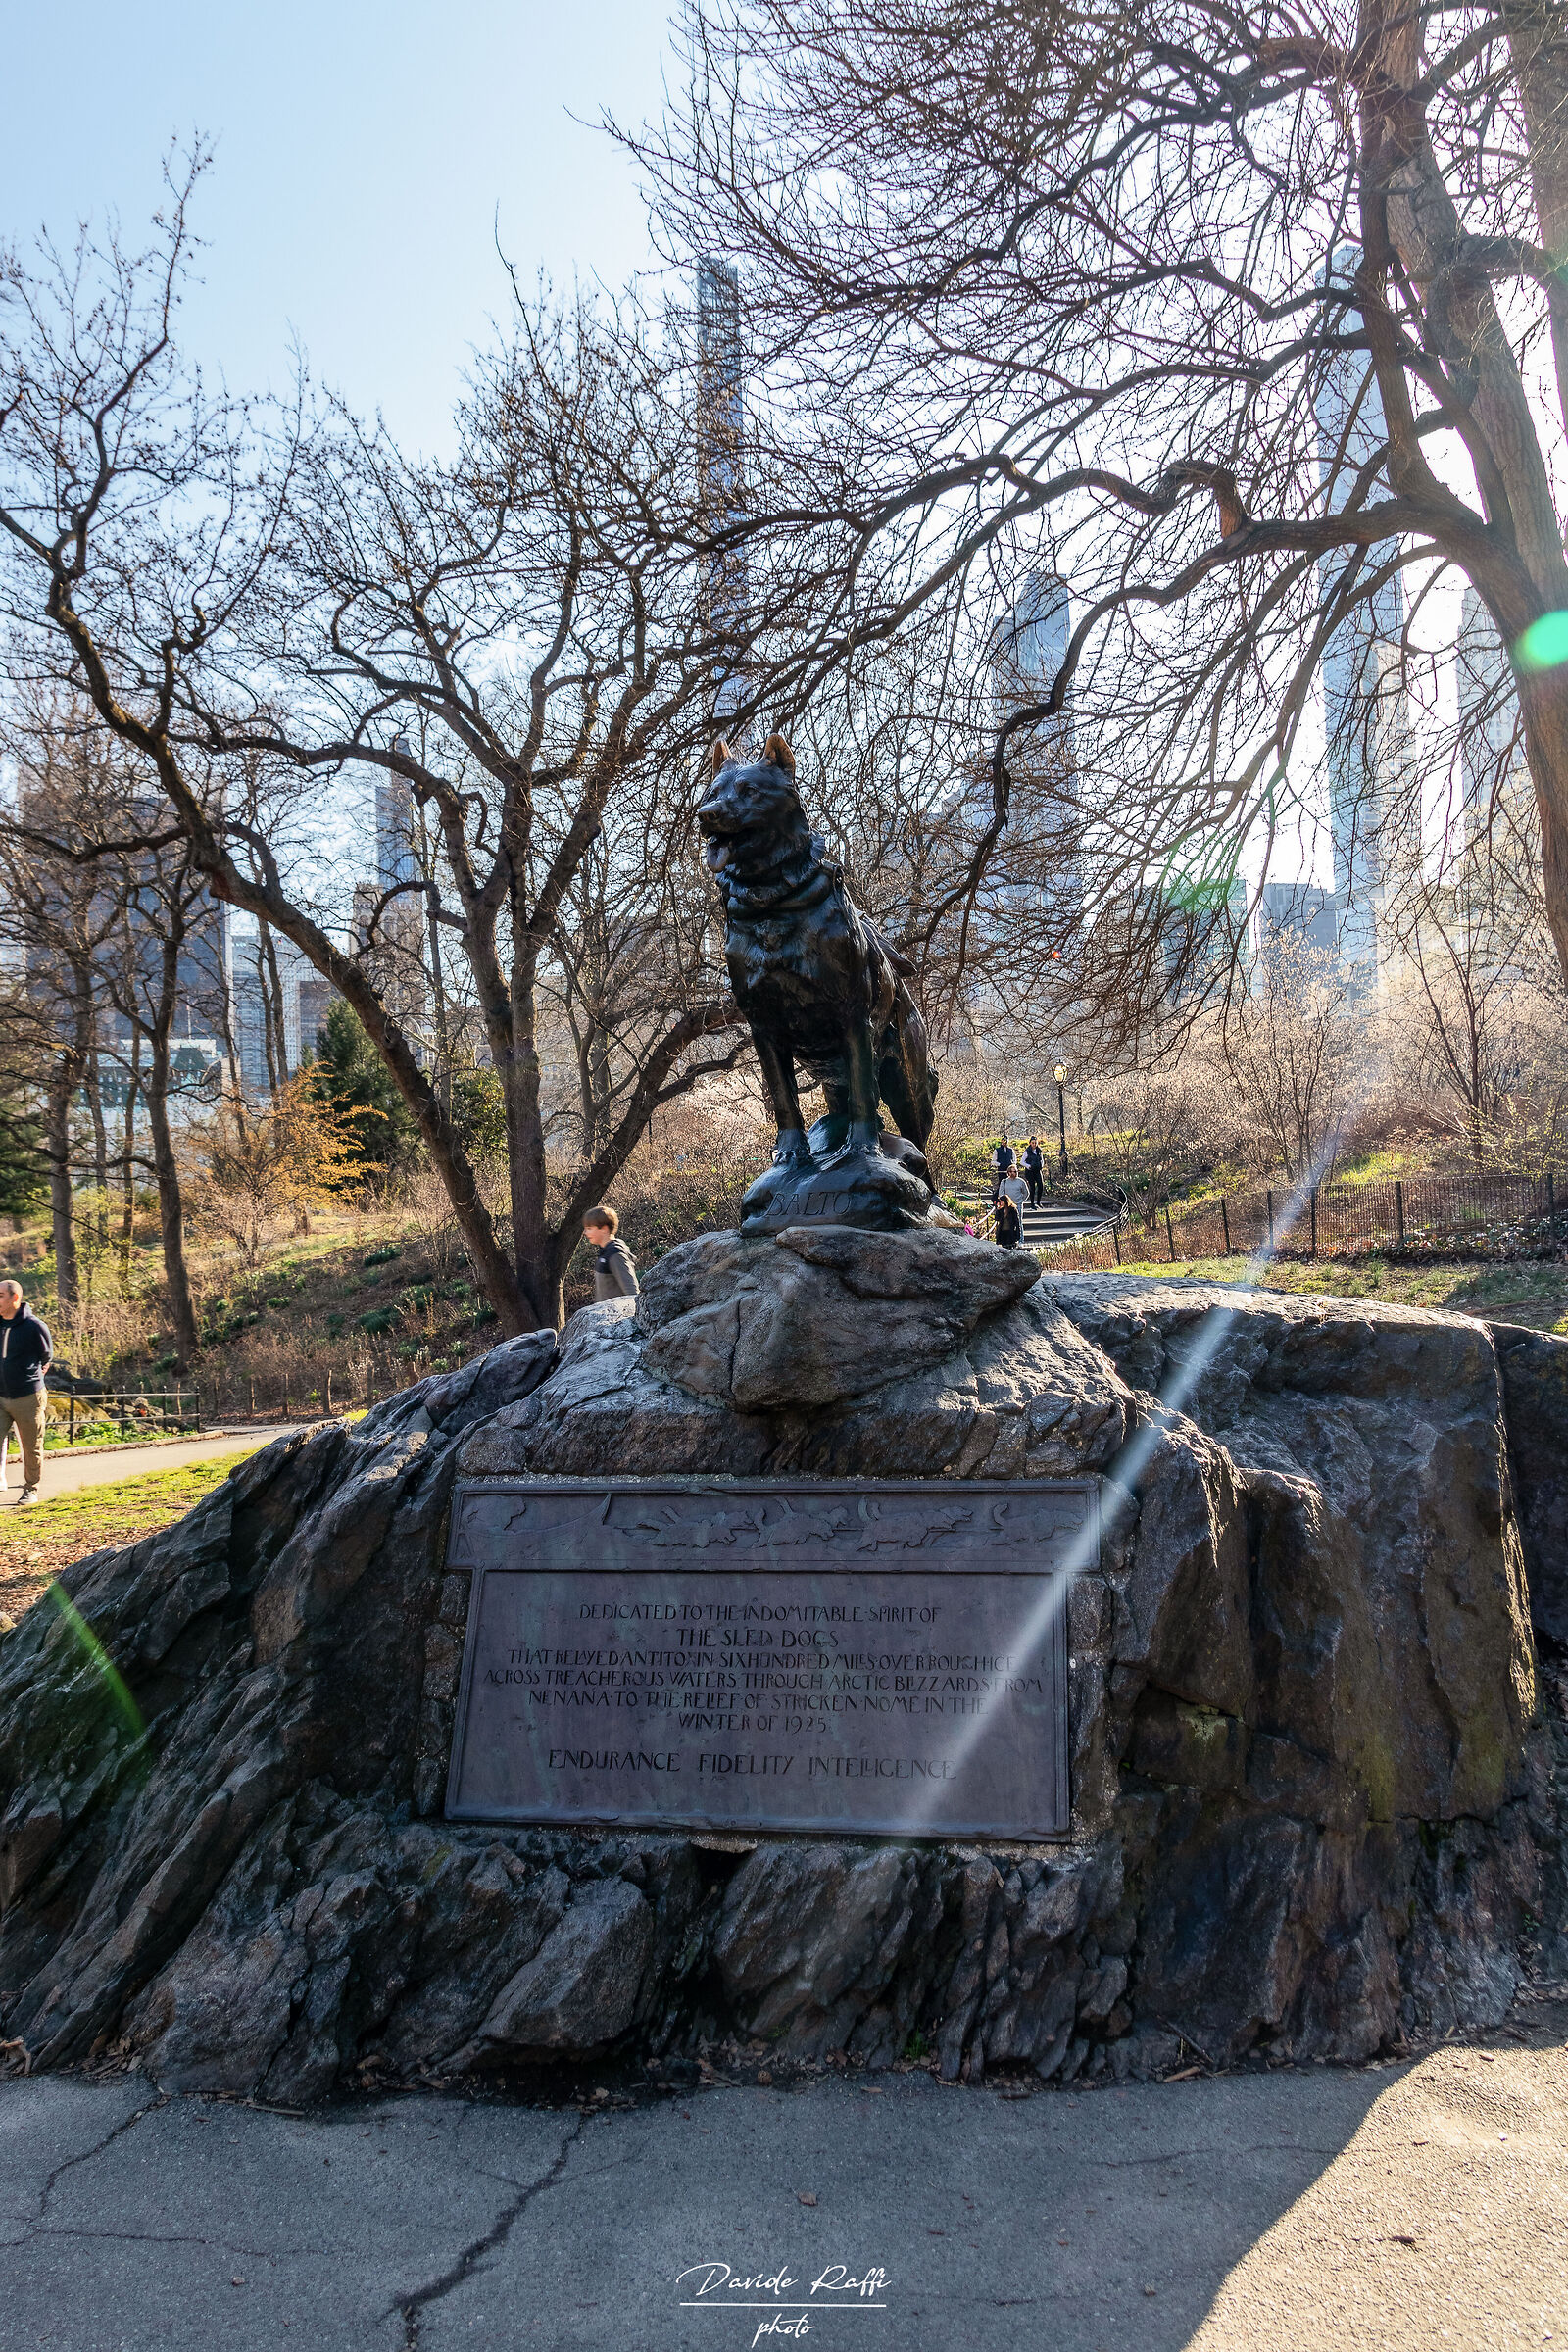 The statue of Balto in Central Park...